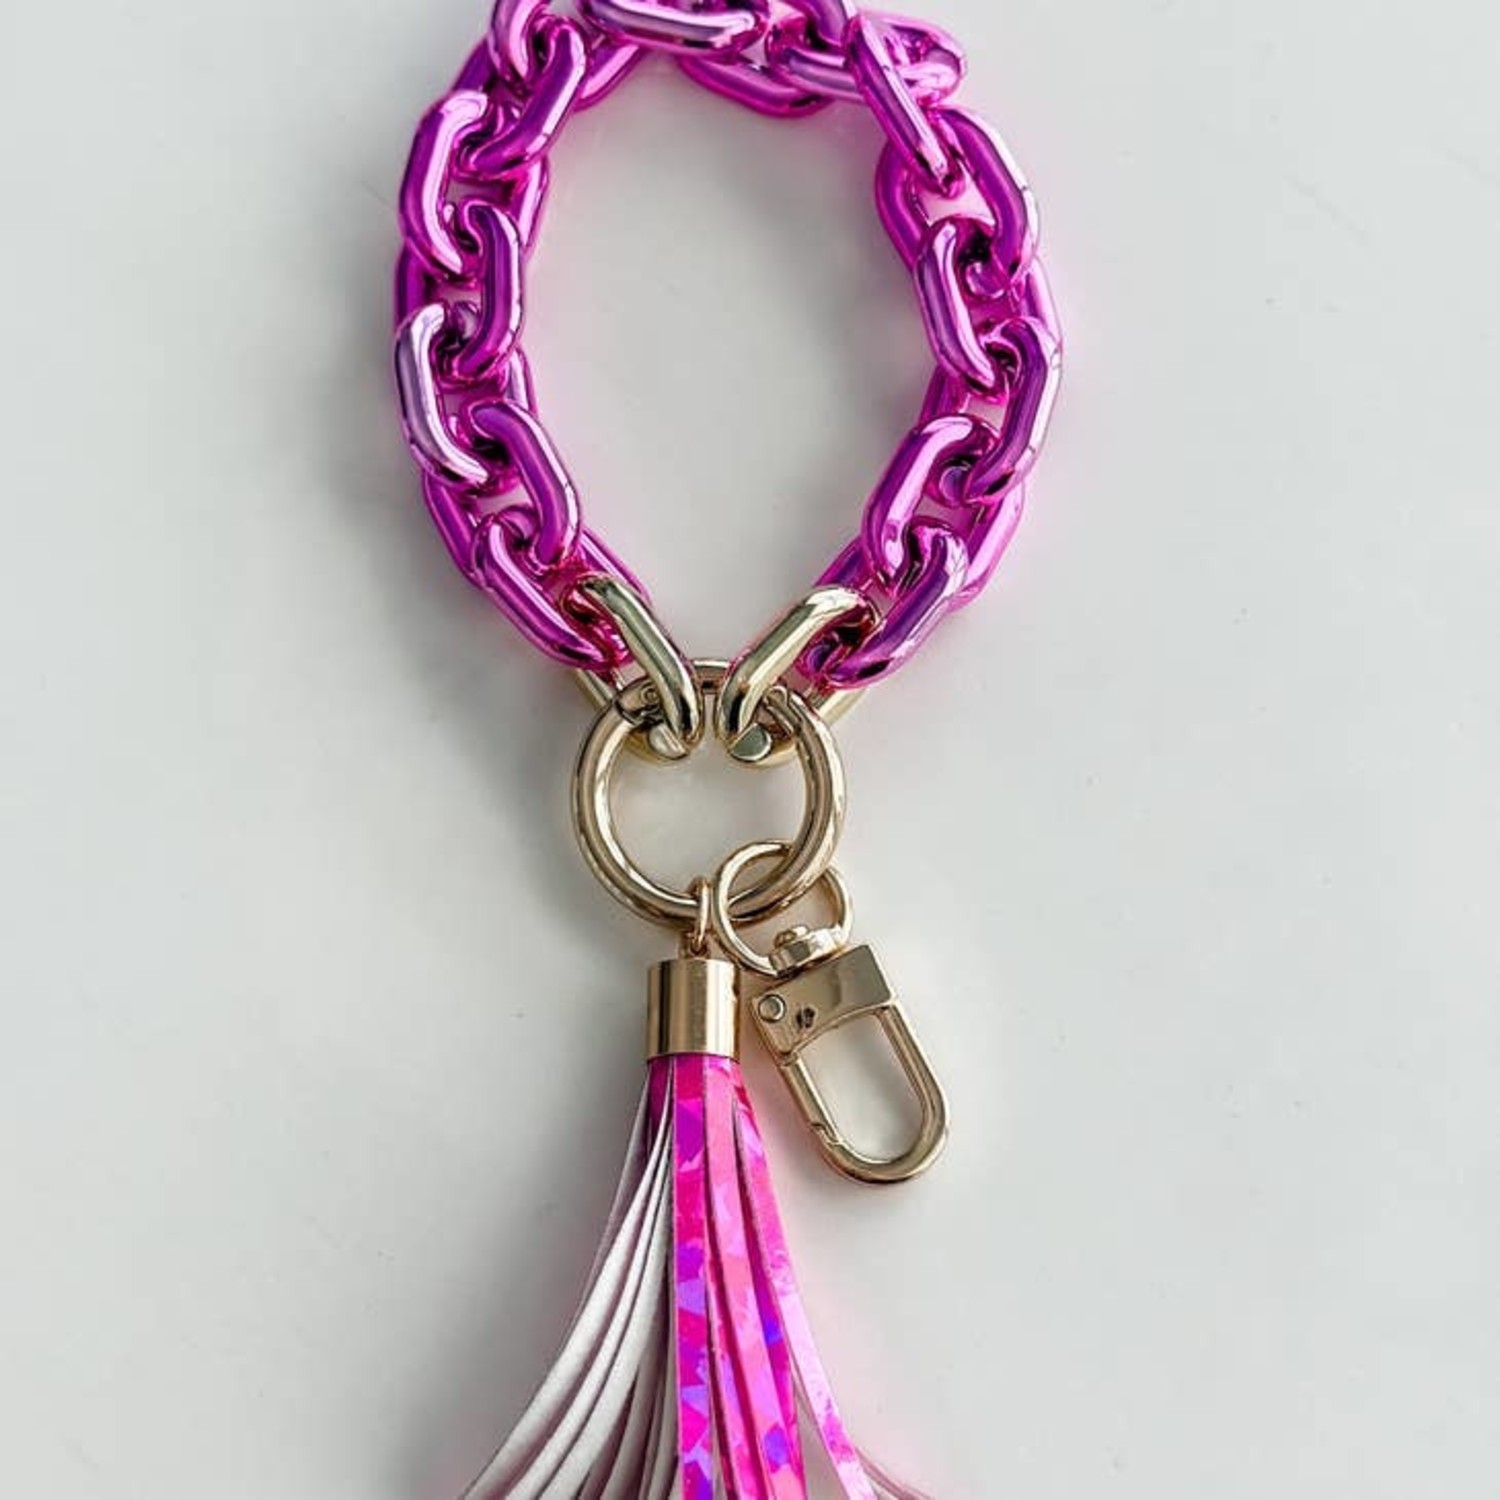 Leather Bracelet Key Ring Bangle Keyring, Tassel Ring Key Ring Keychain  Wristlet for Women Girls, Pink